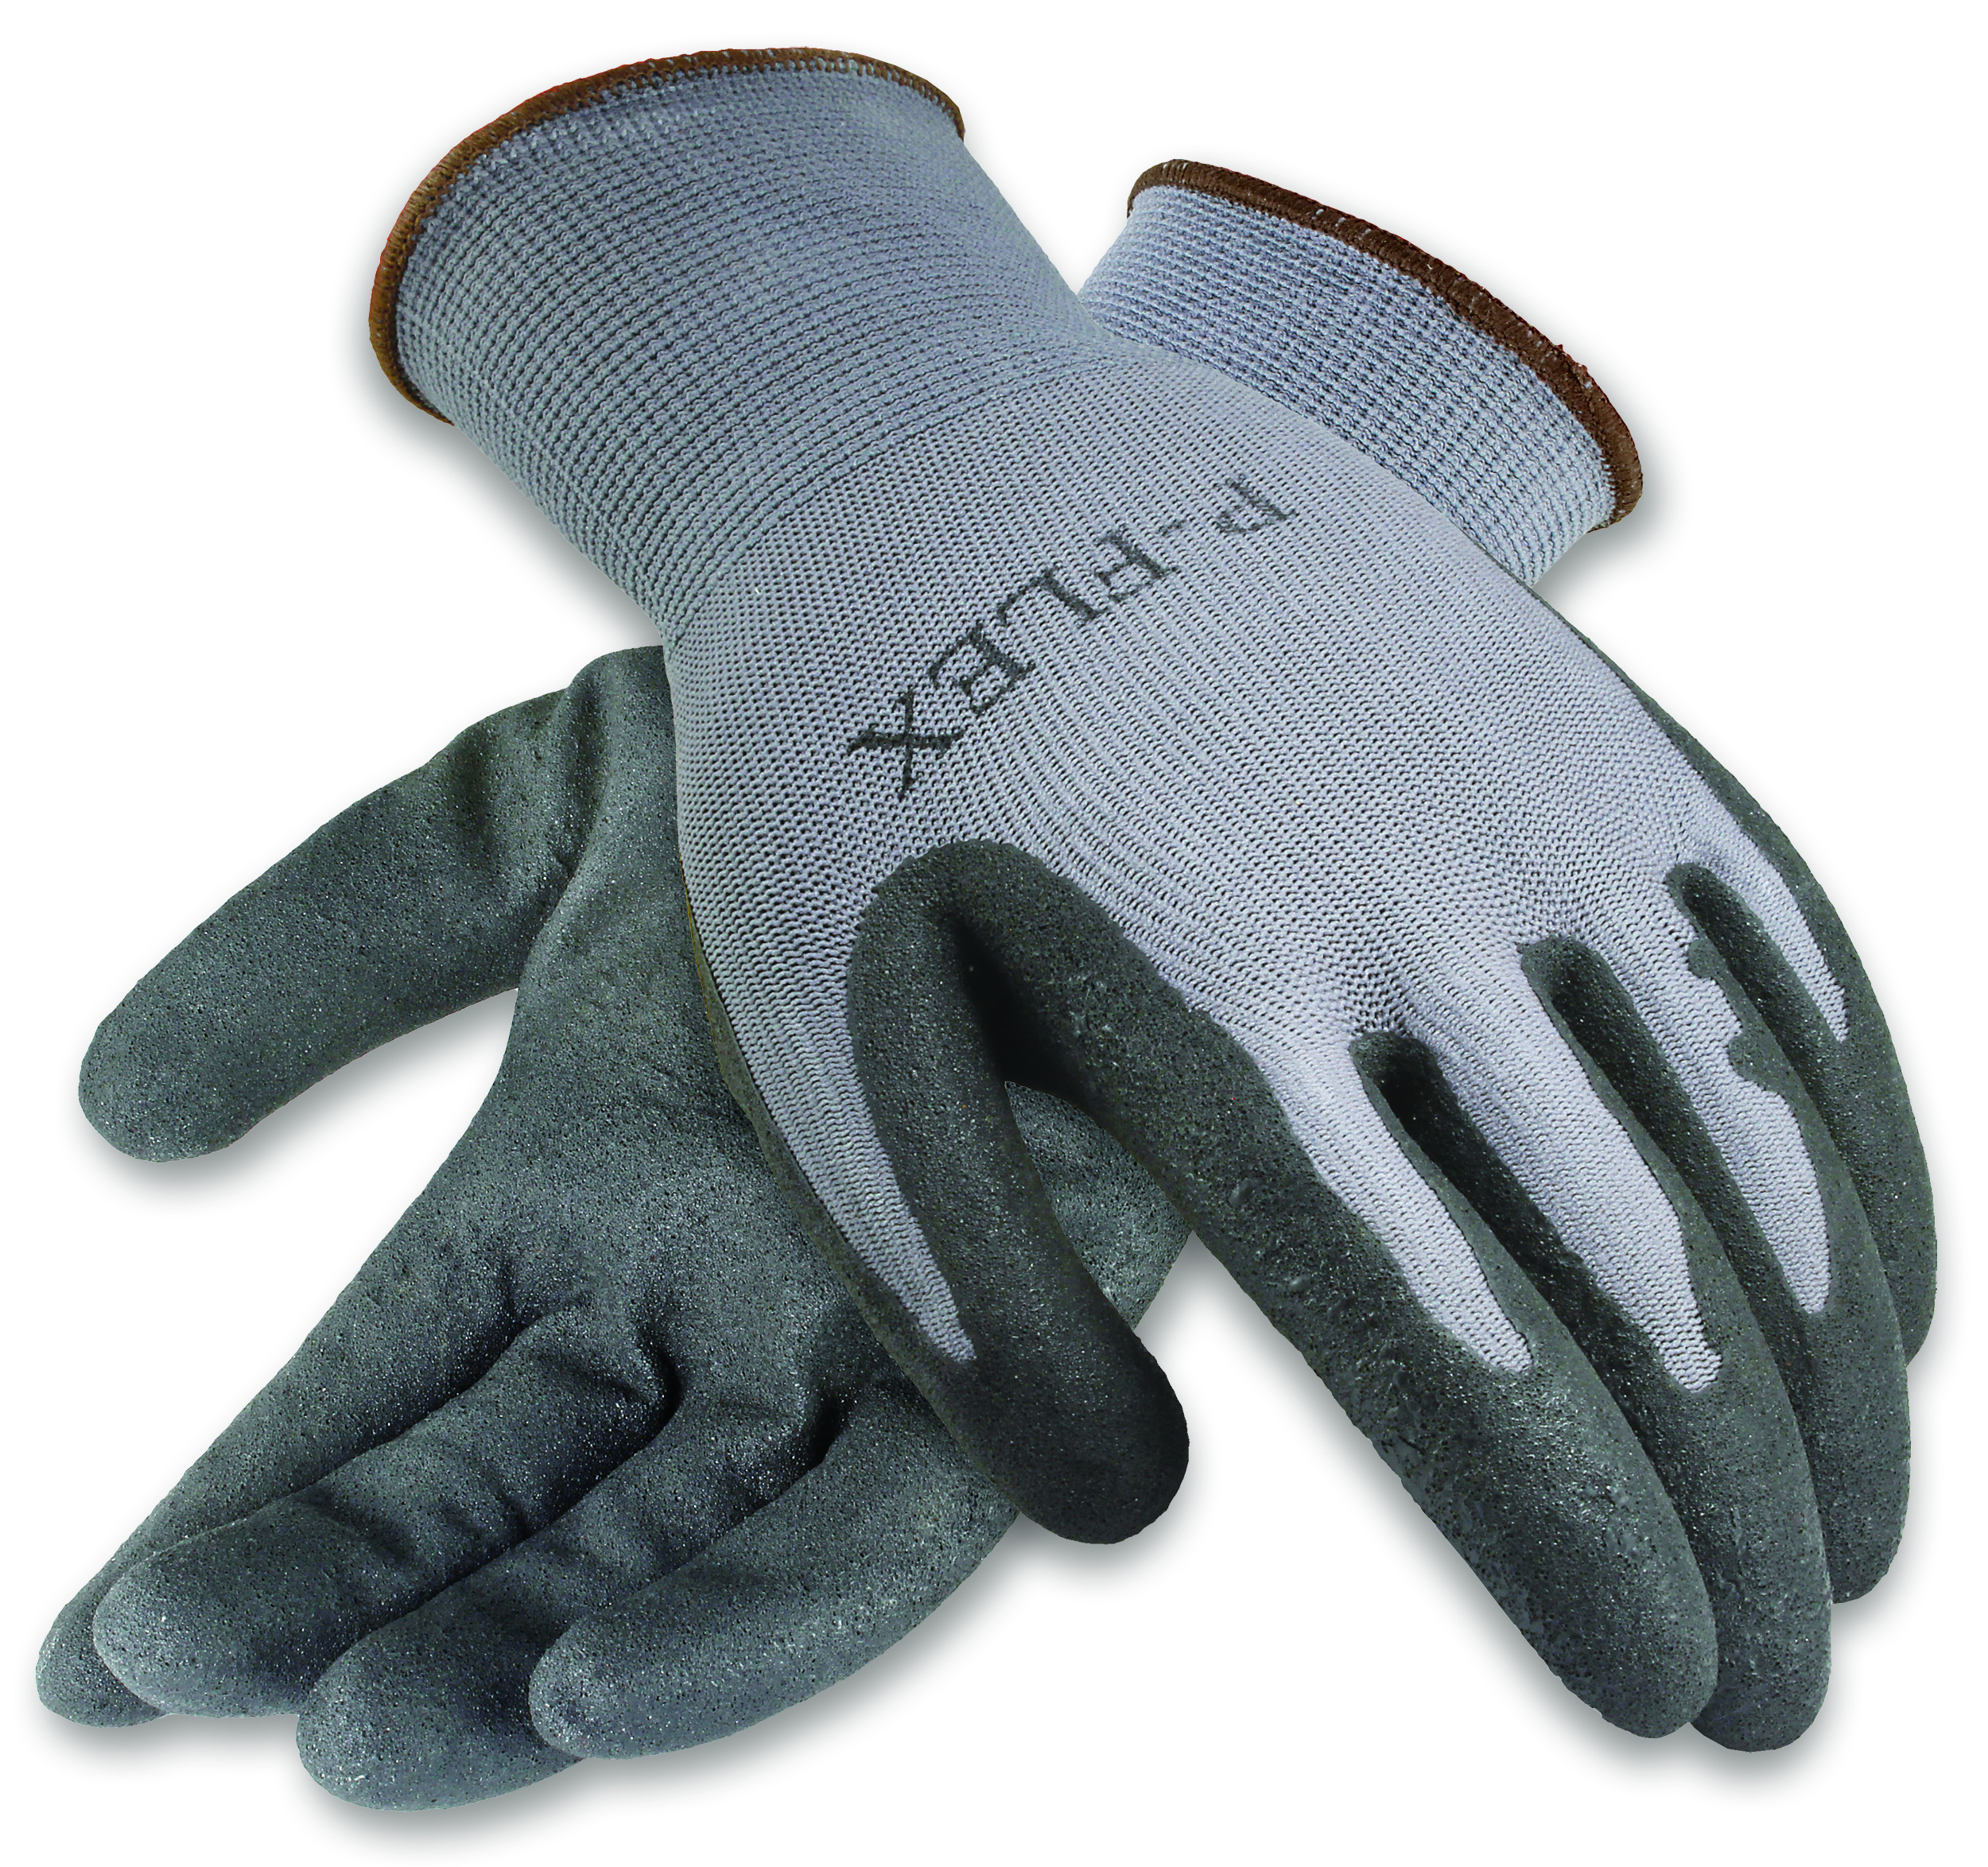 P-Flex Foamed Nitrile Palm Gloves